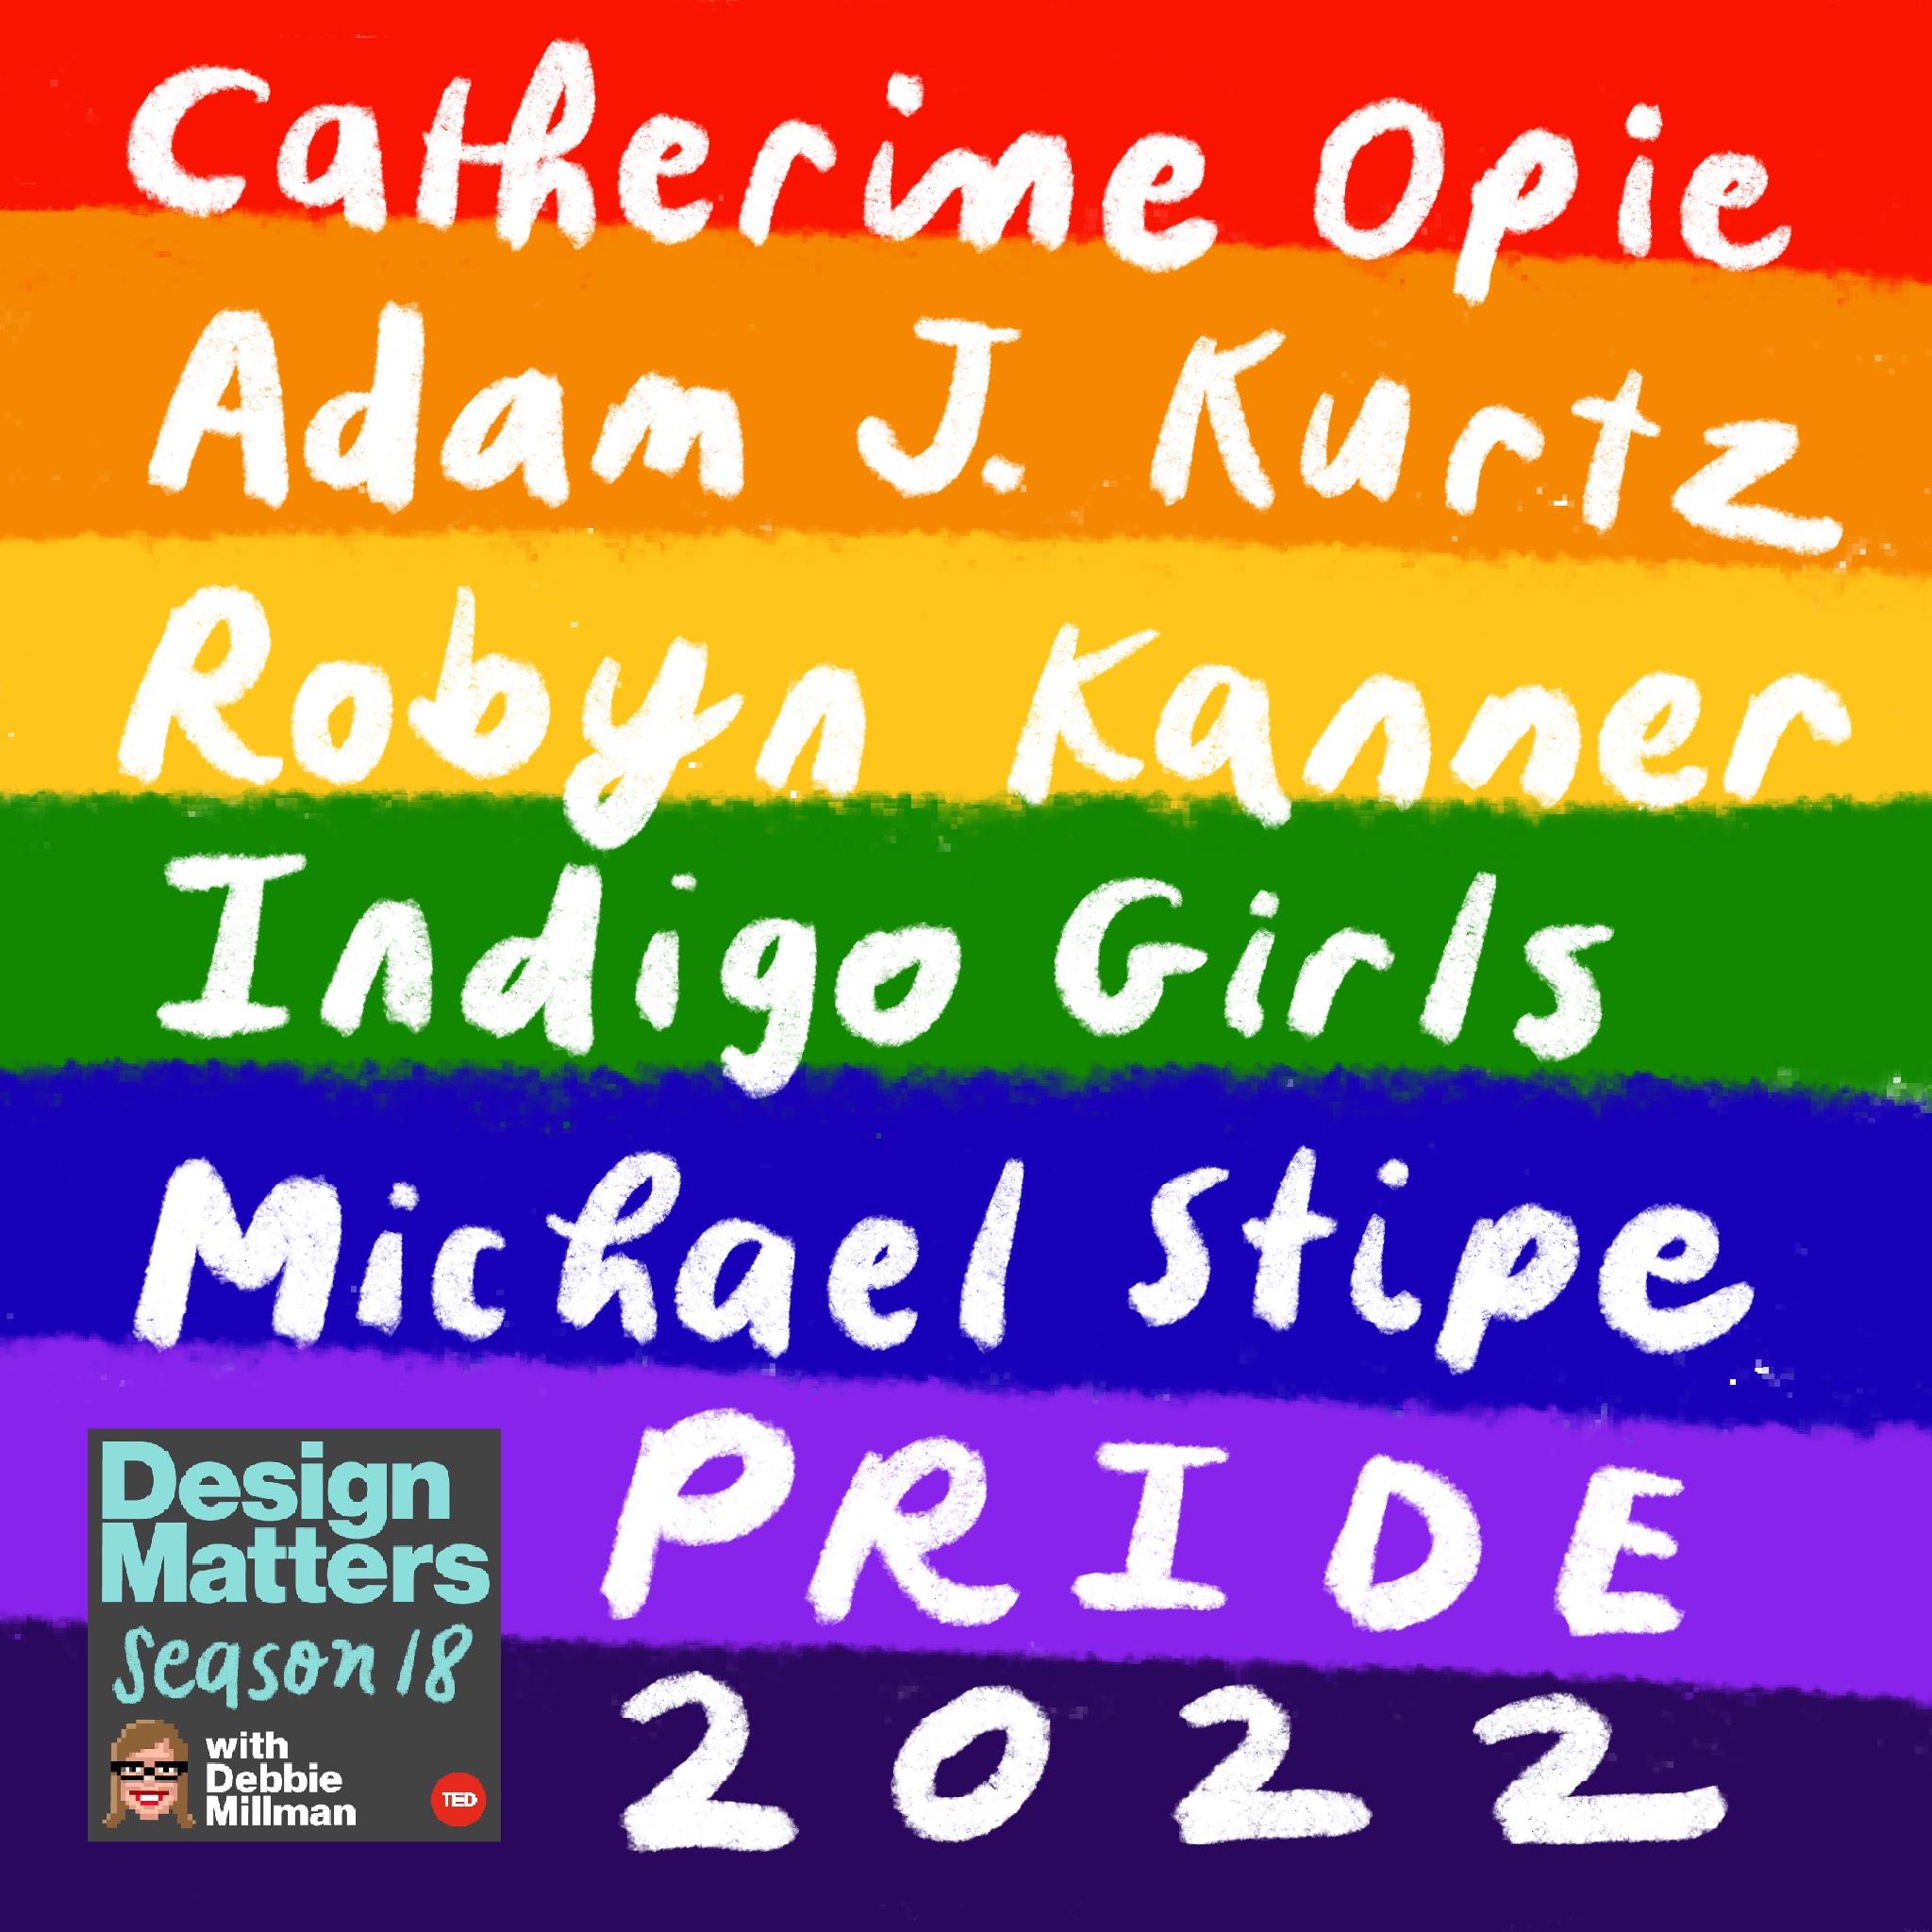 Thumbnail for "Celebrating Pride".